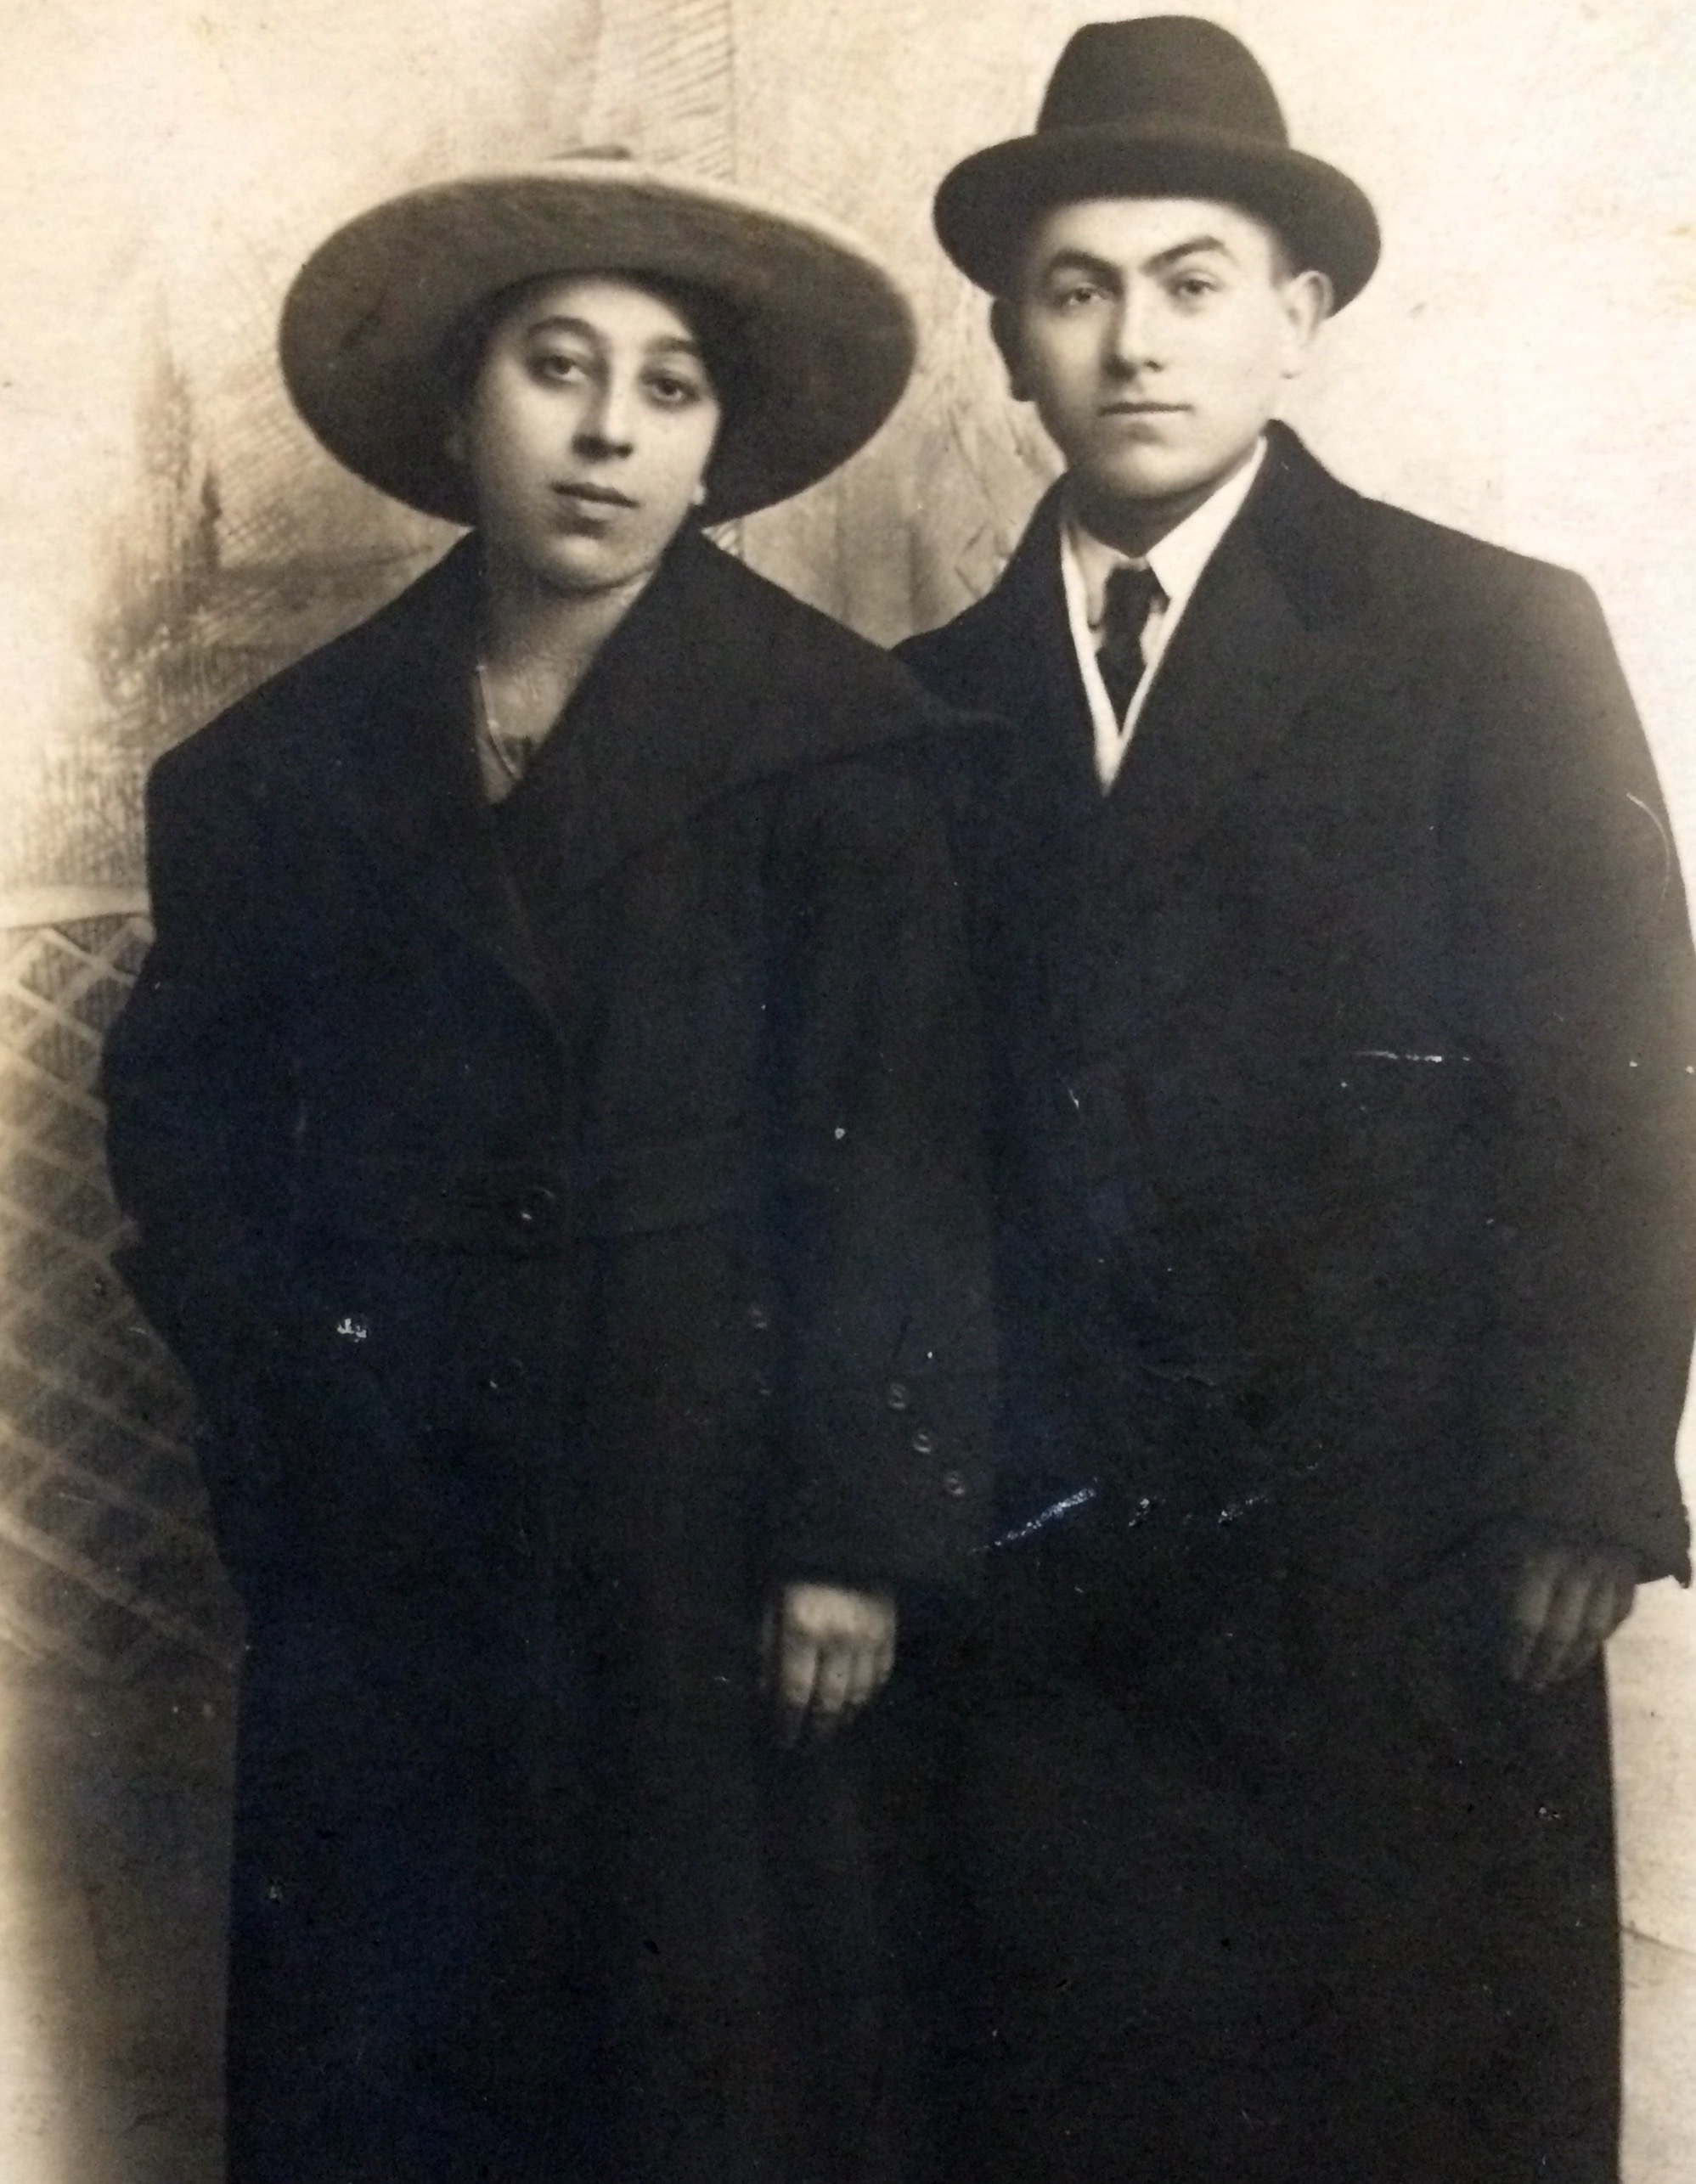 My grandparents circa 1925